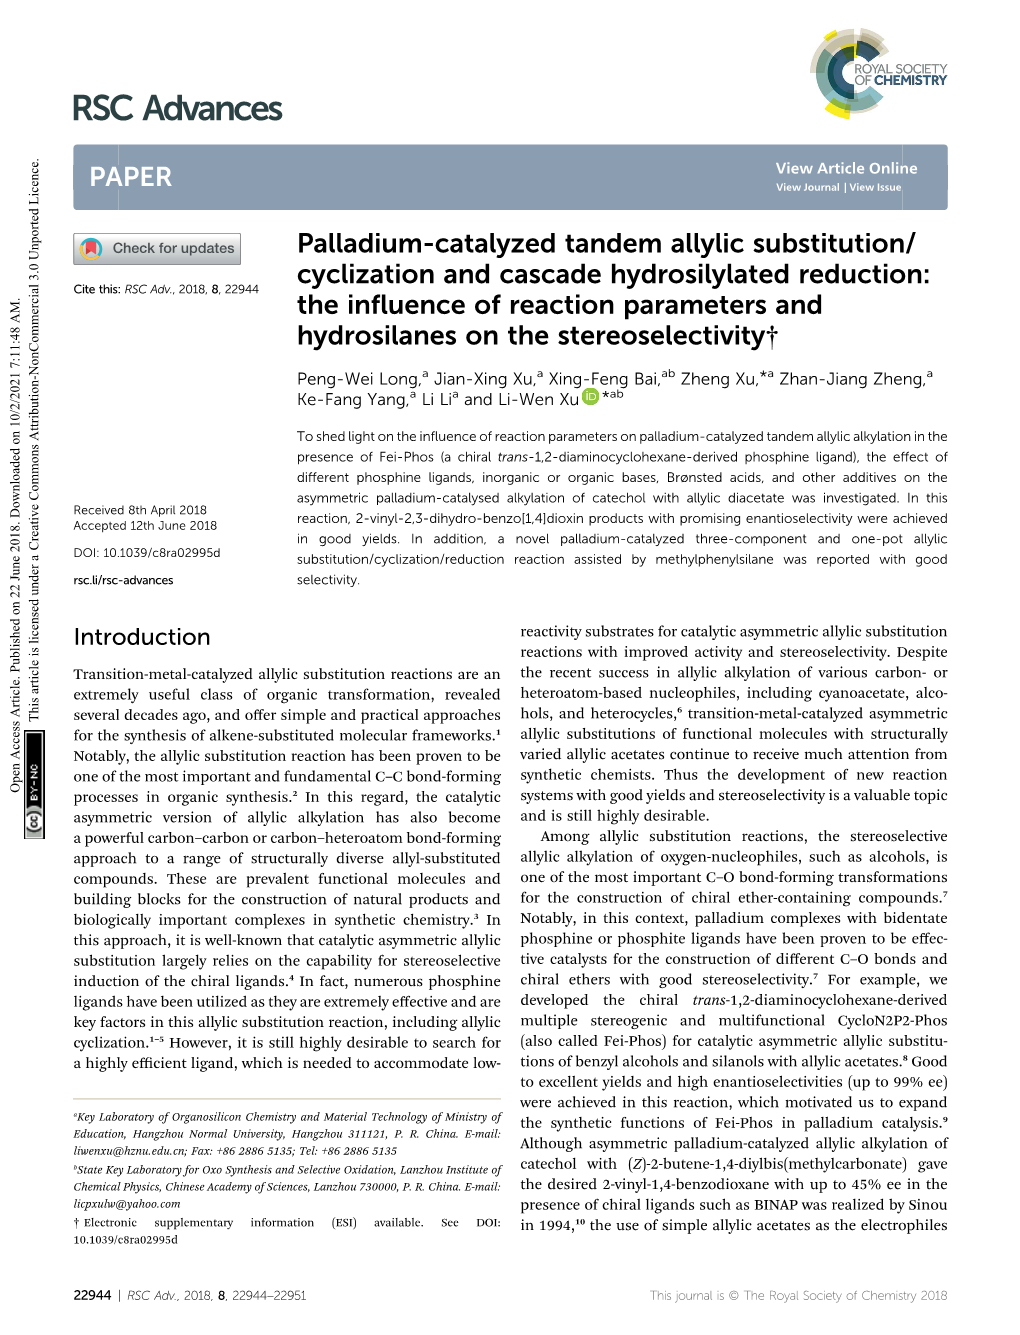 Palladium-Catalyzed Tandem Allylic Substitution/Cyclization and Cascade